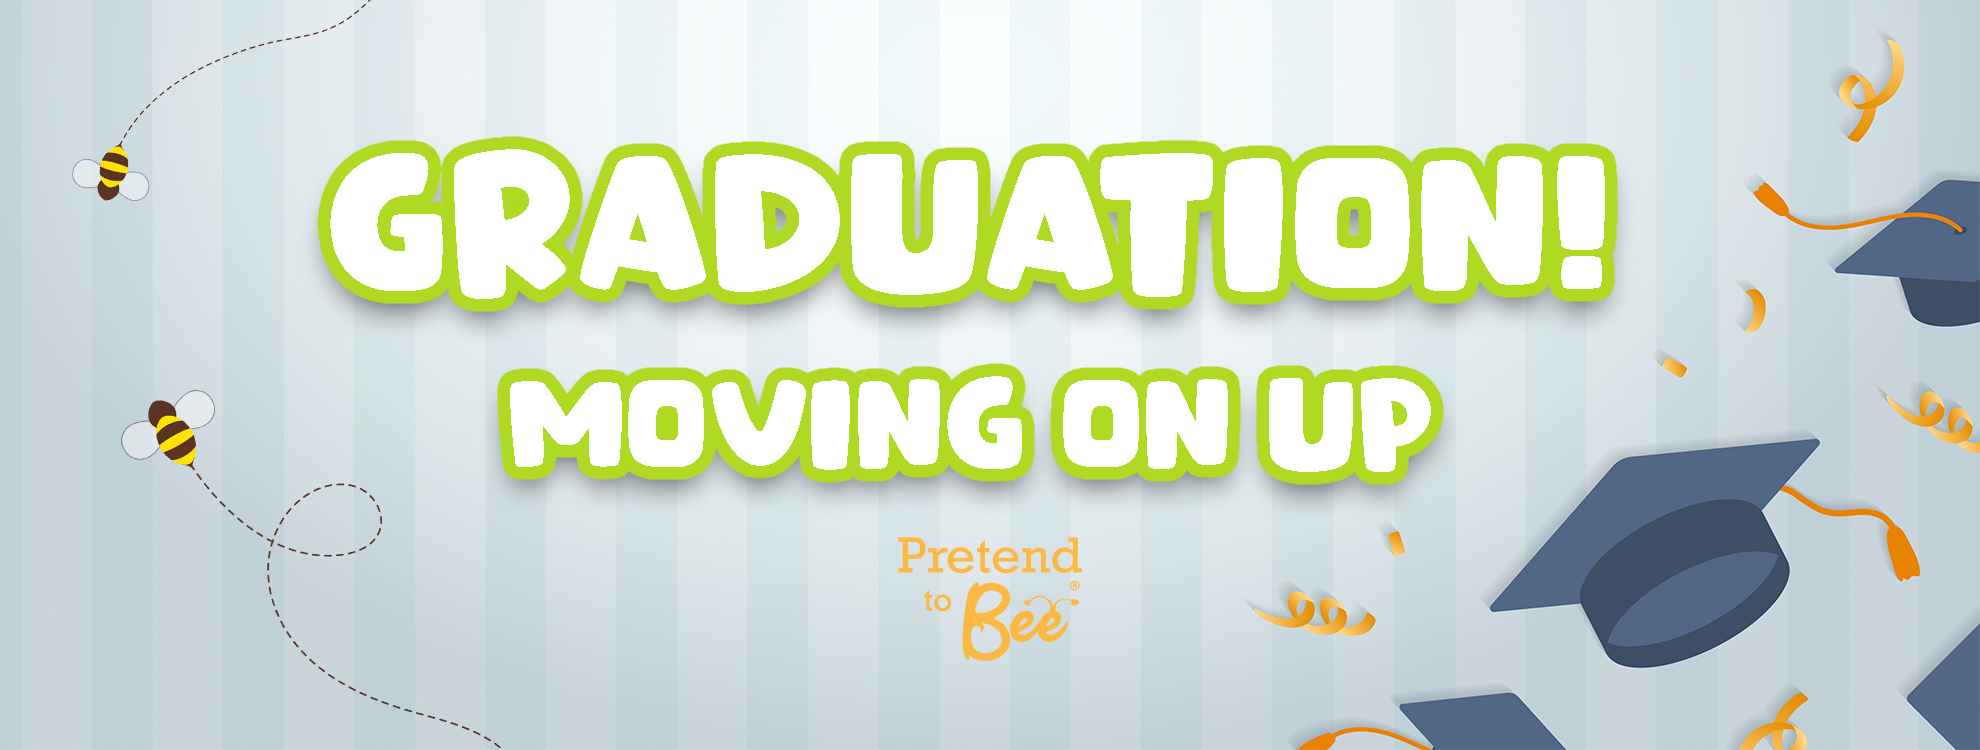 Graduation - Moving On Up!